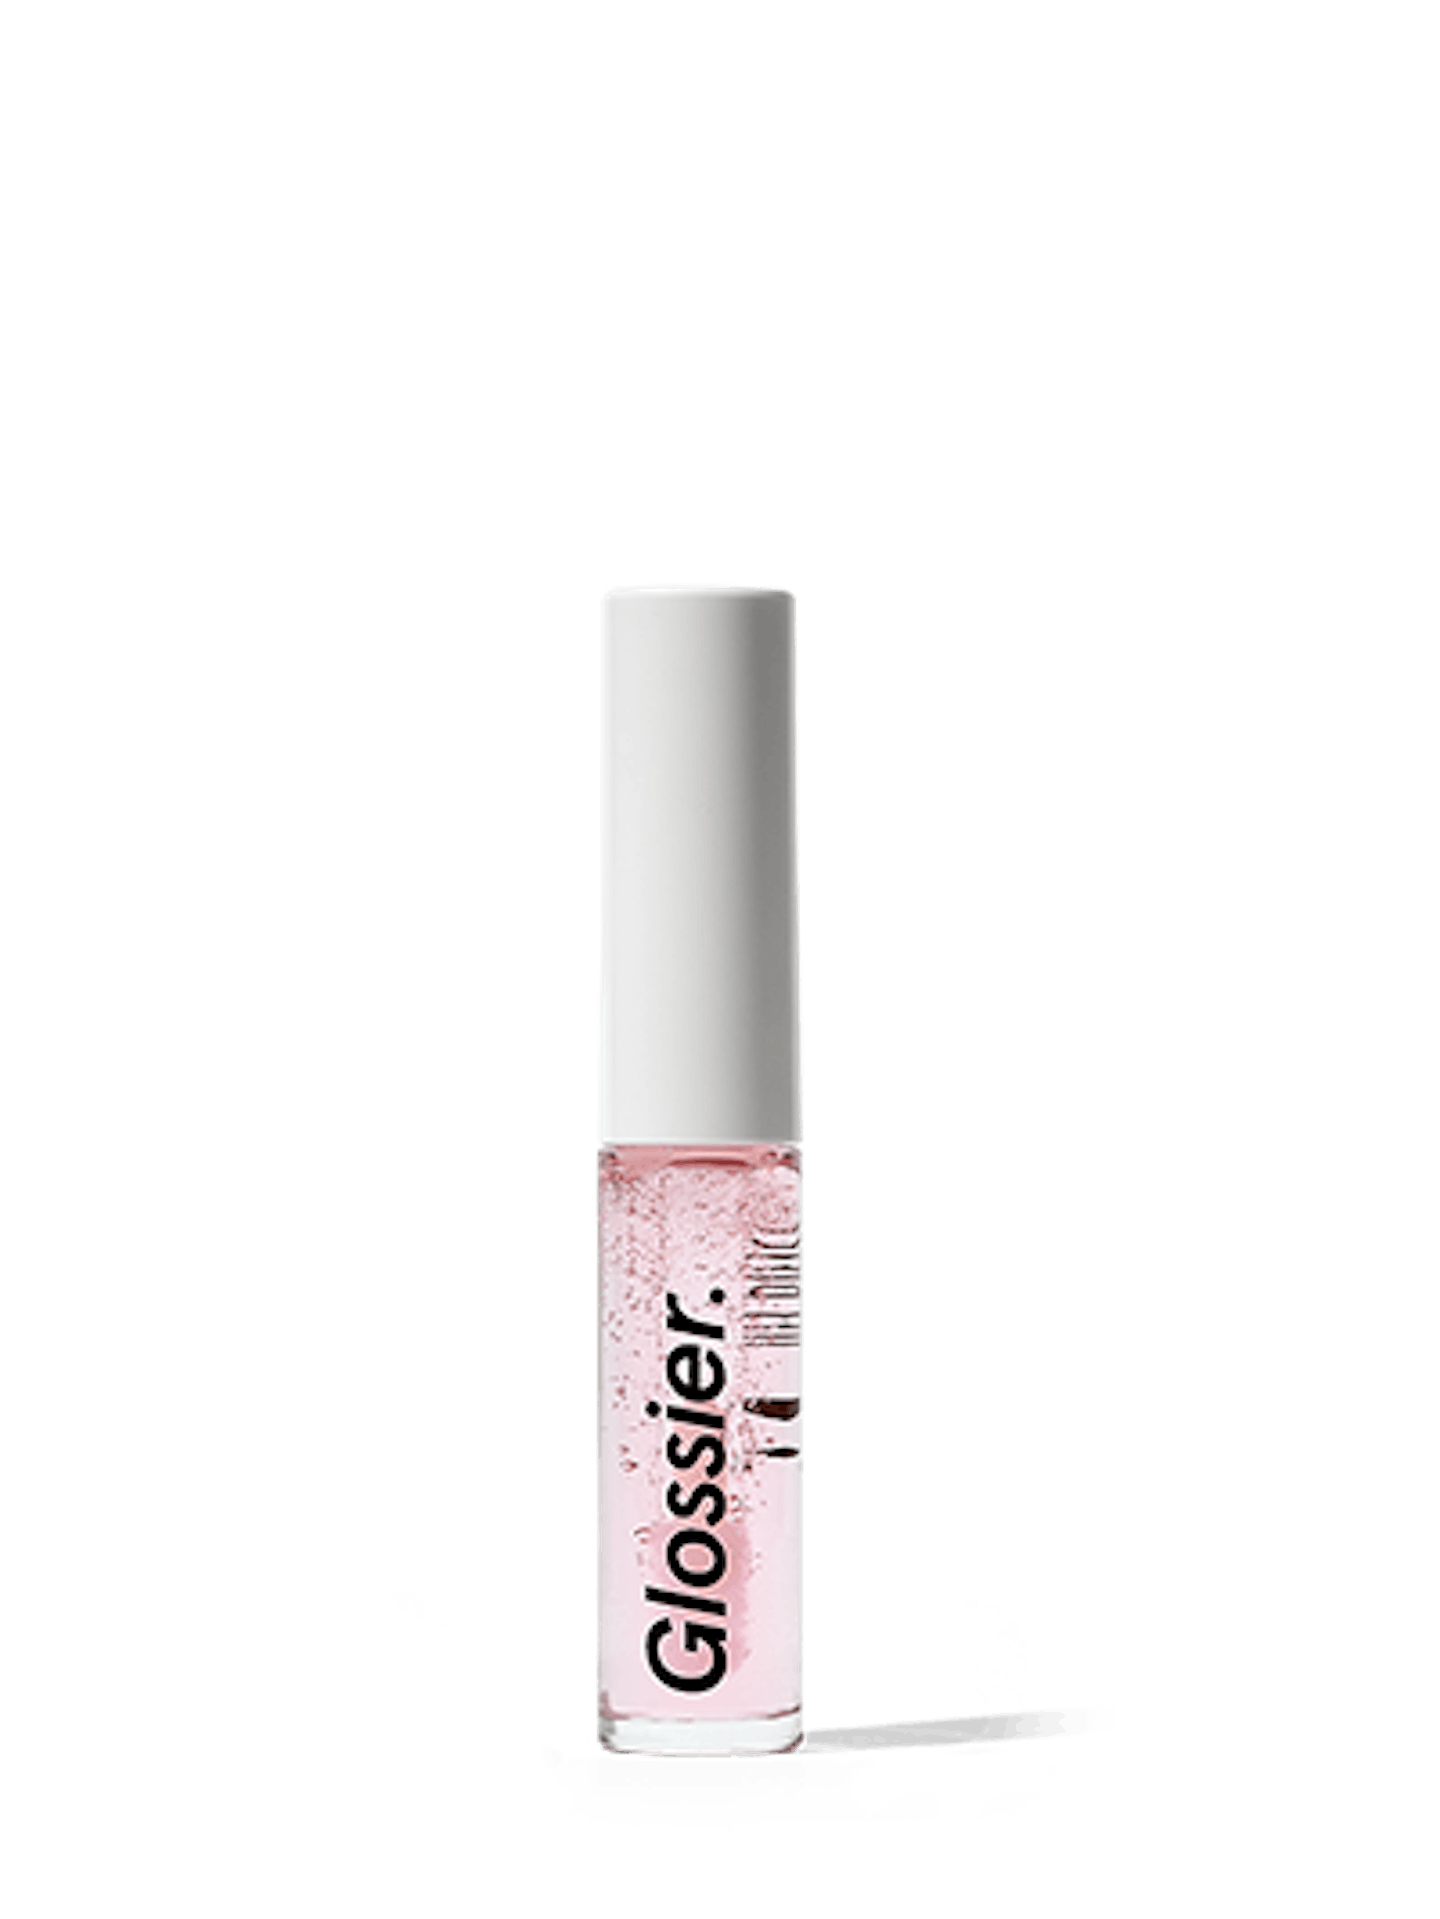 Glossier Lip Gloss in Clear